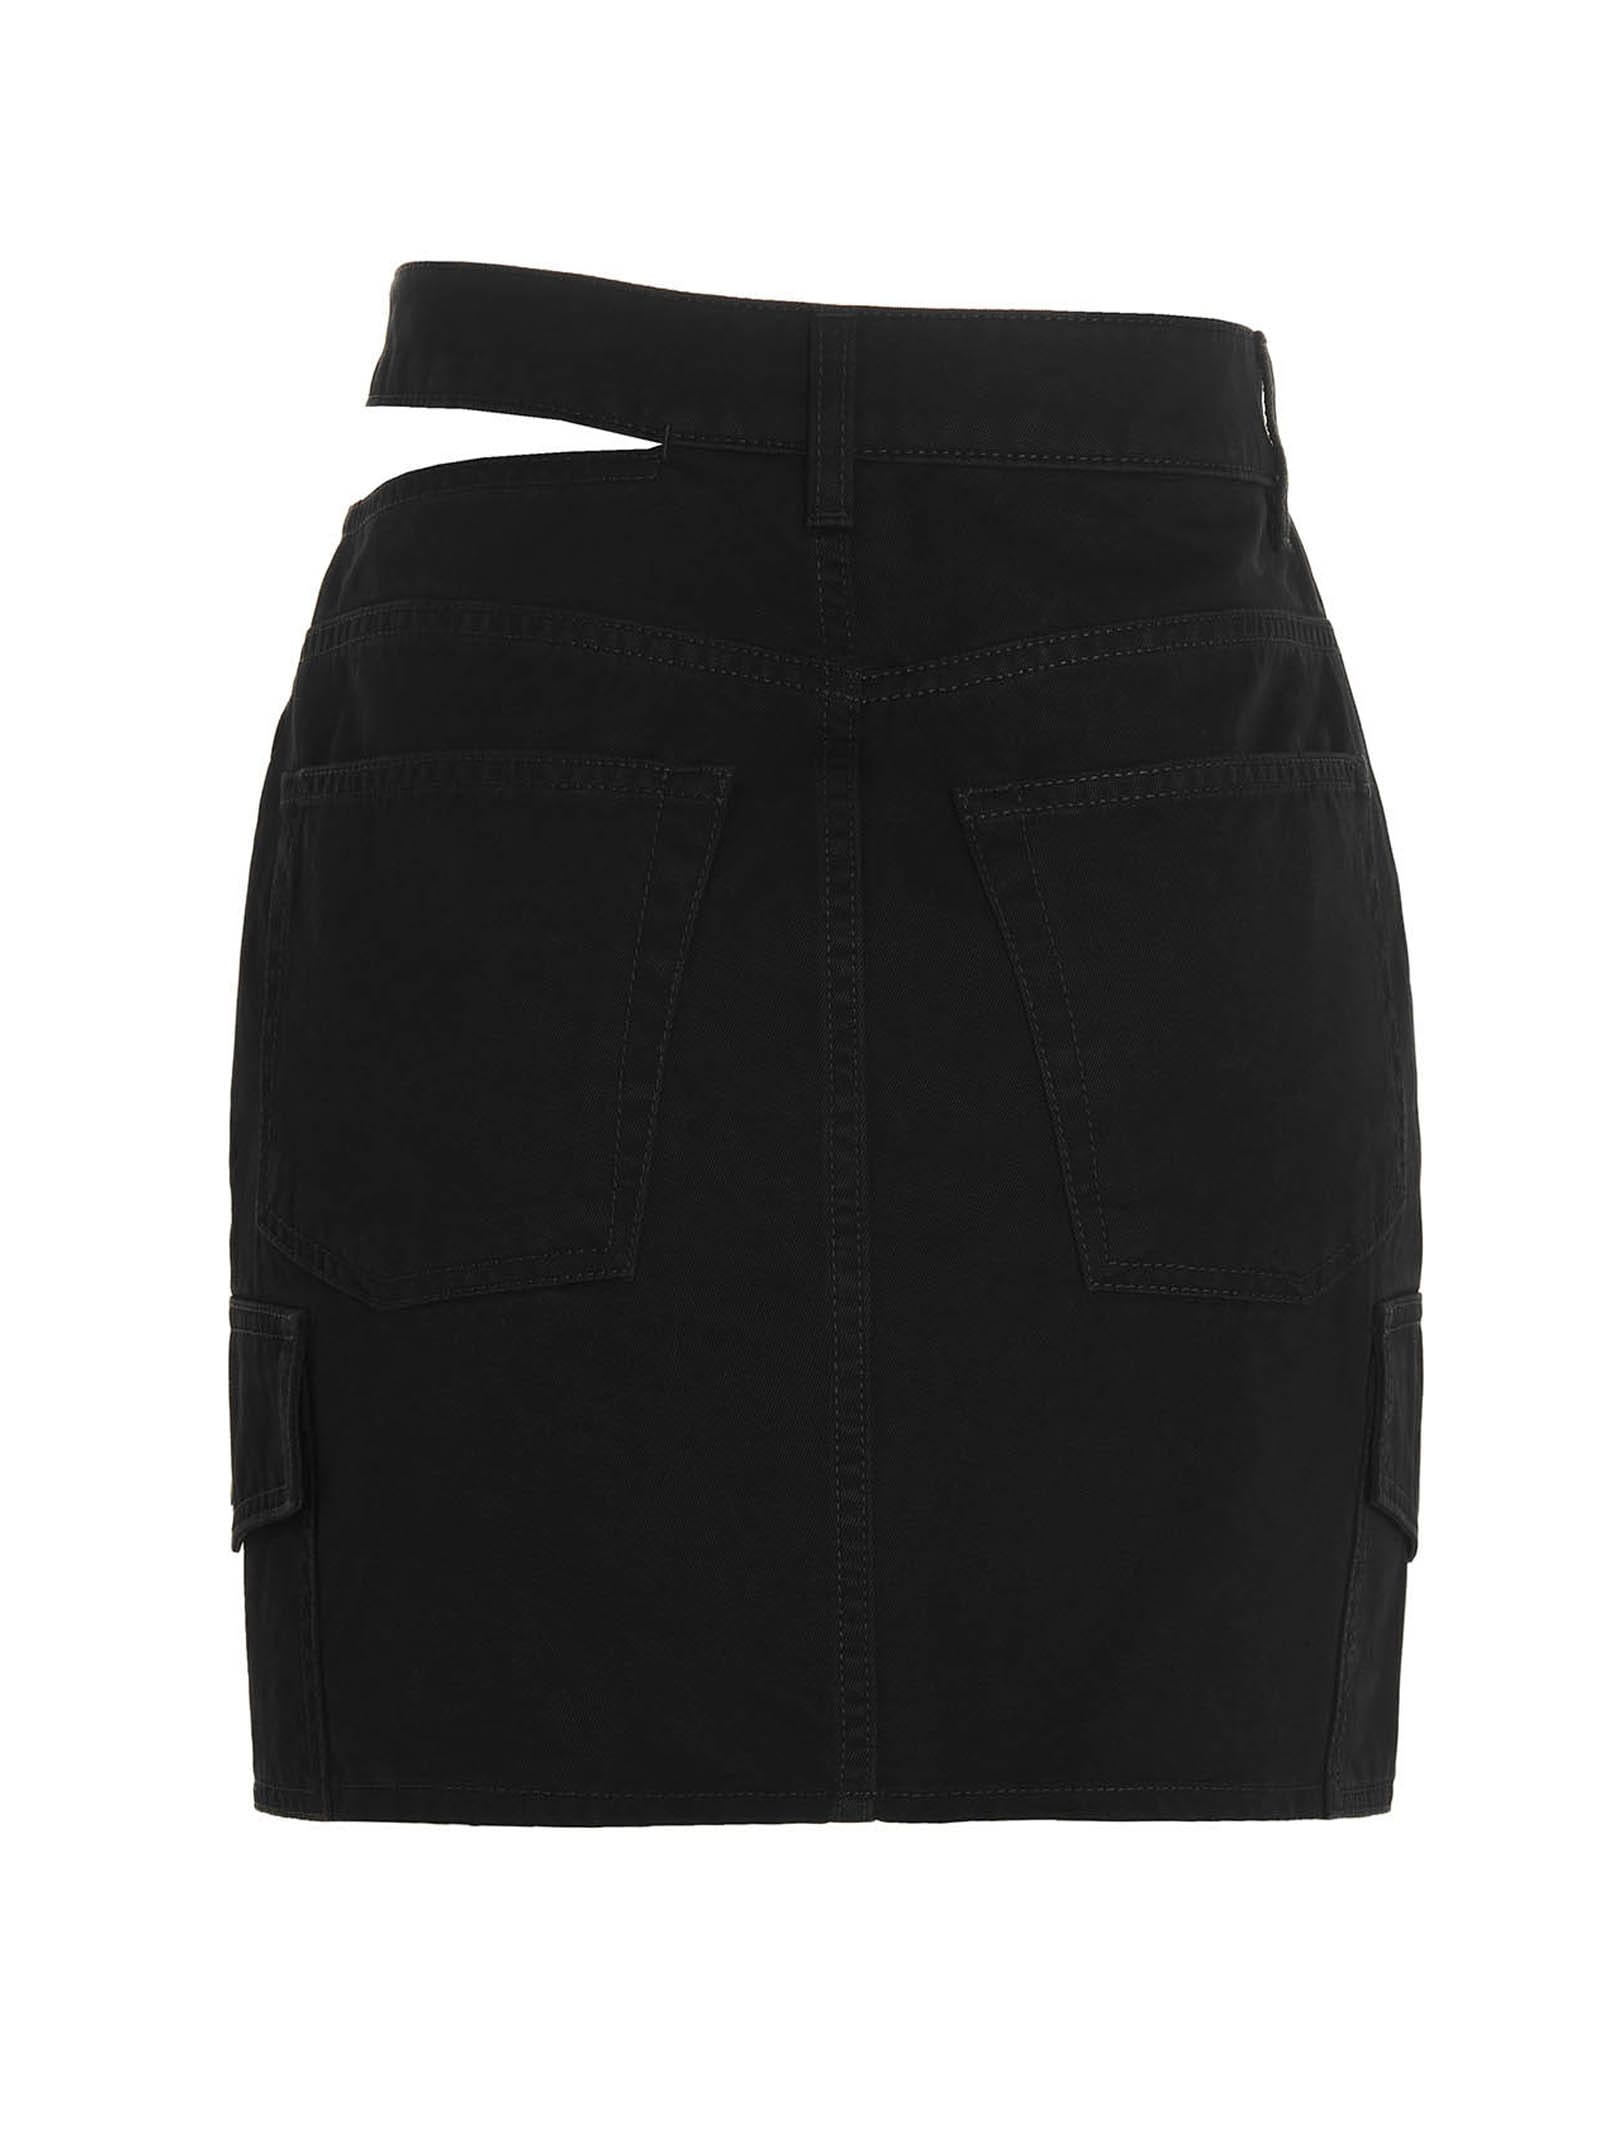 HERON PRESTON open Side Belt Skirt